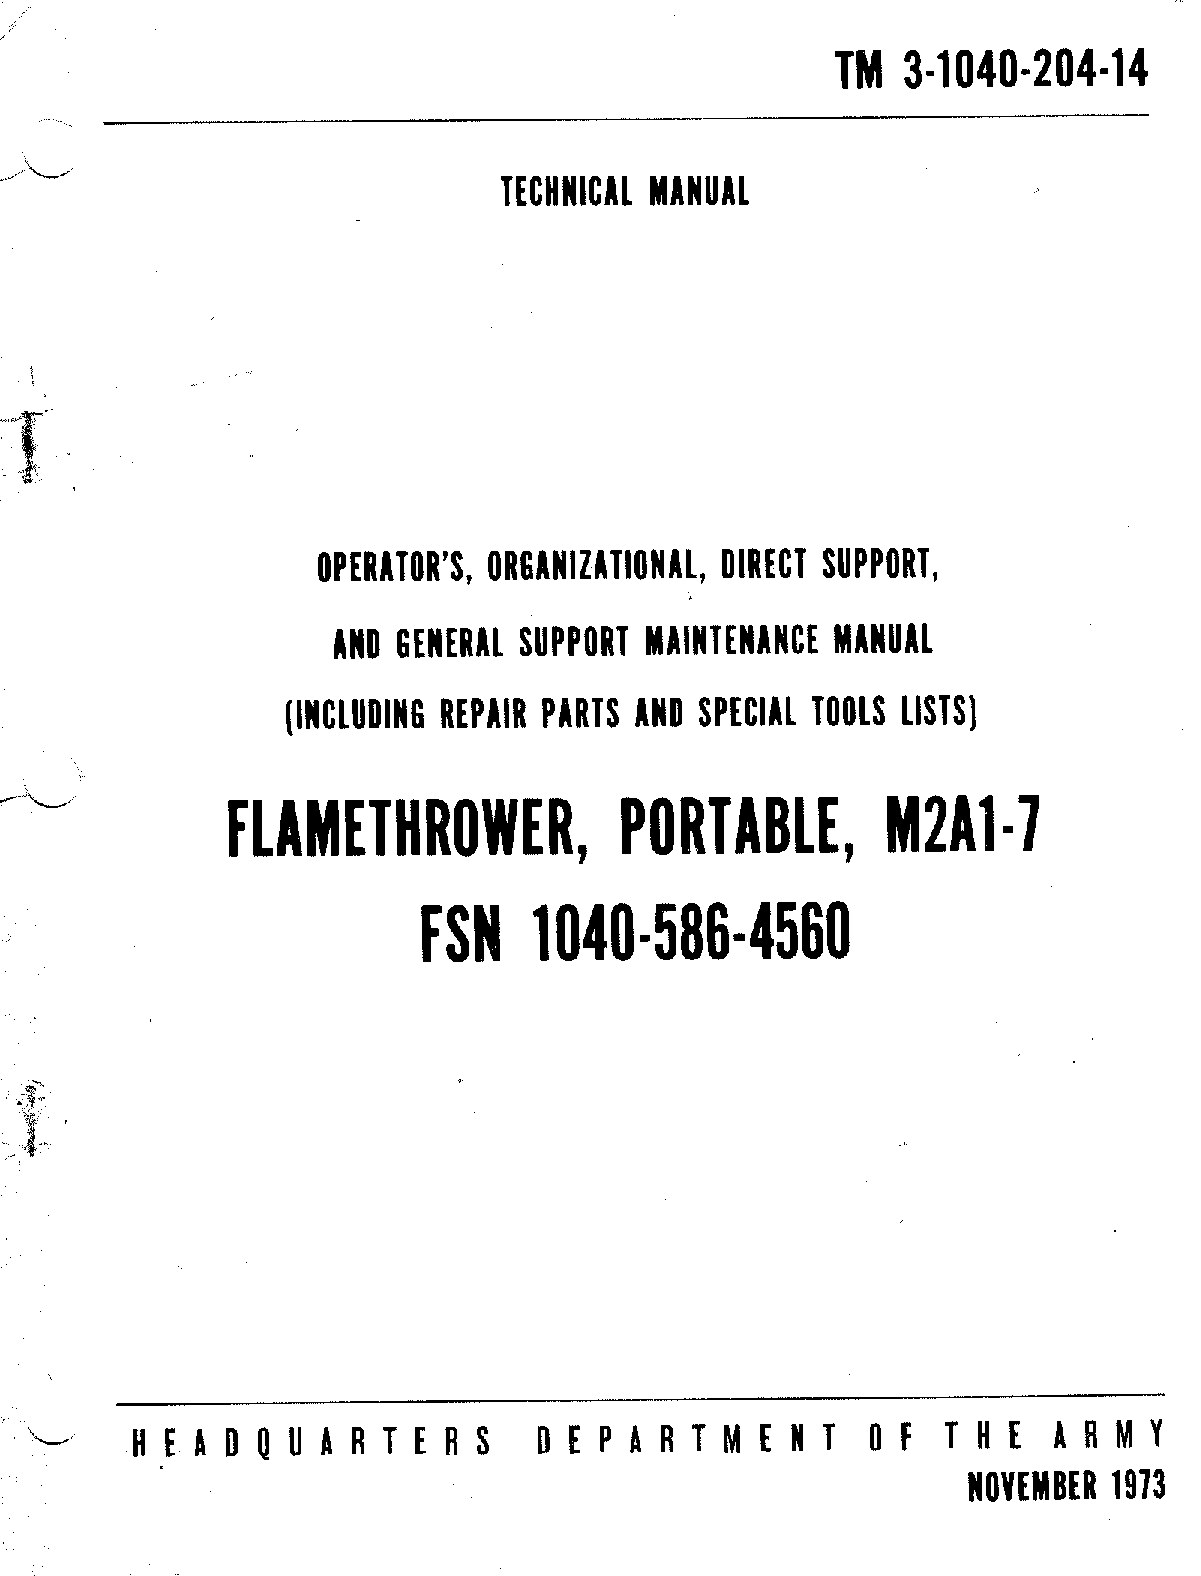 TM 3-1040-204-14  Flamethrower, Portable, M2A1-7